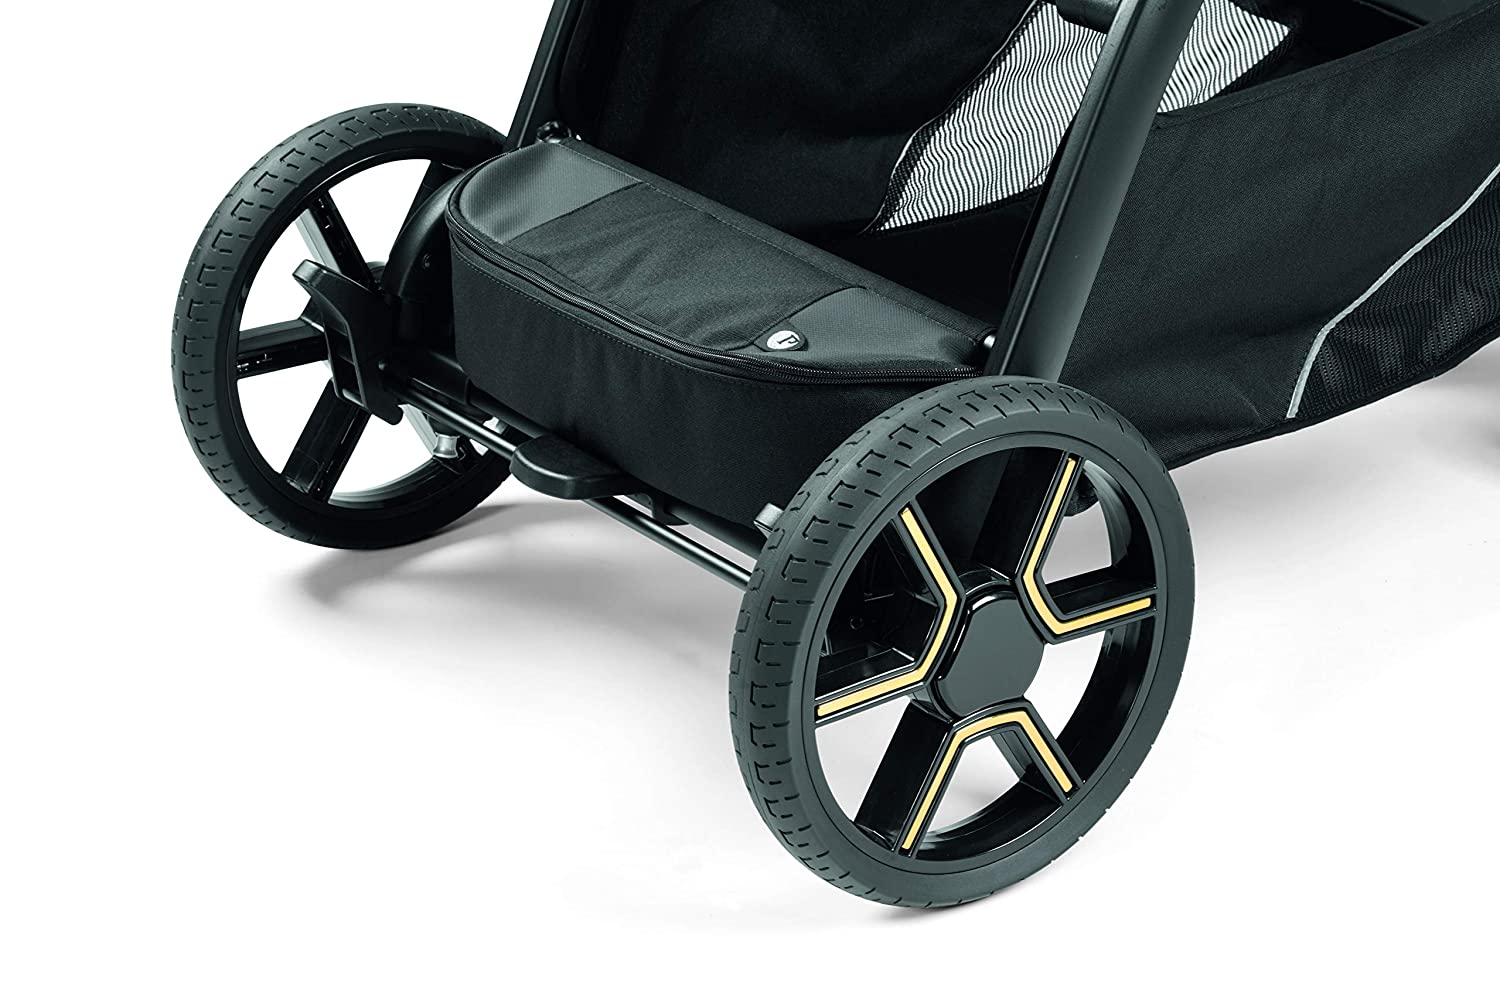 PEG PEREGO YPSI Stroller - ANB Baby -Best Stroller